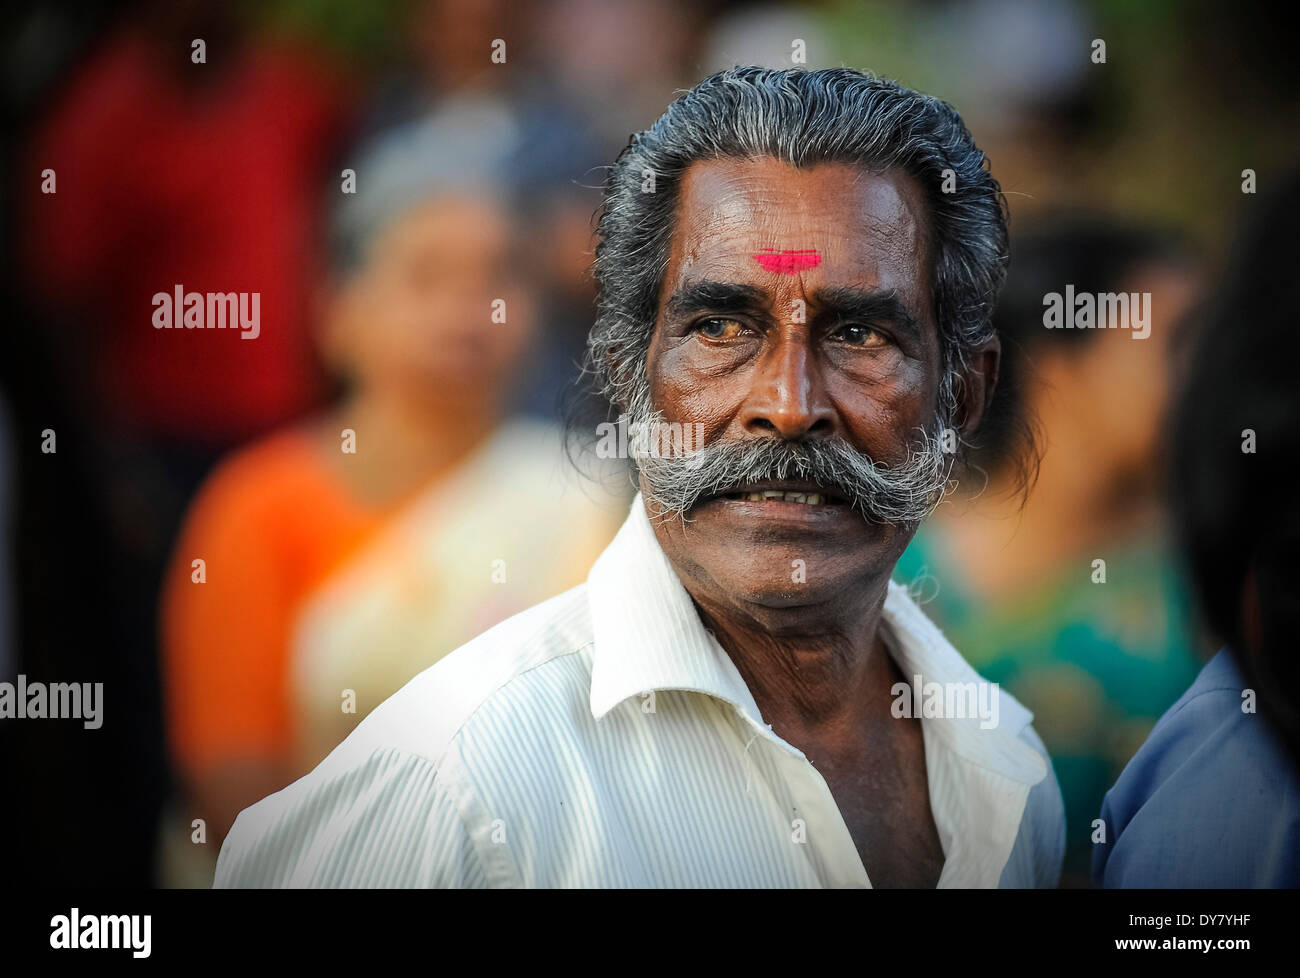 Elderly man with a bindi, Portrait, Kerala, South India, India Stock Photo